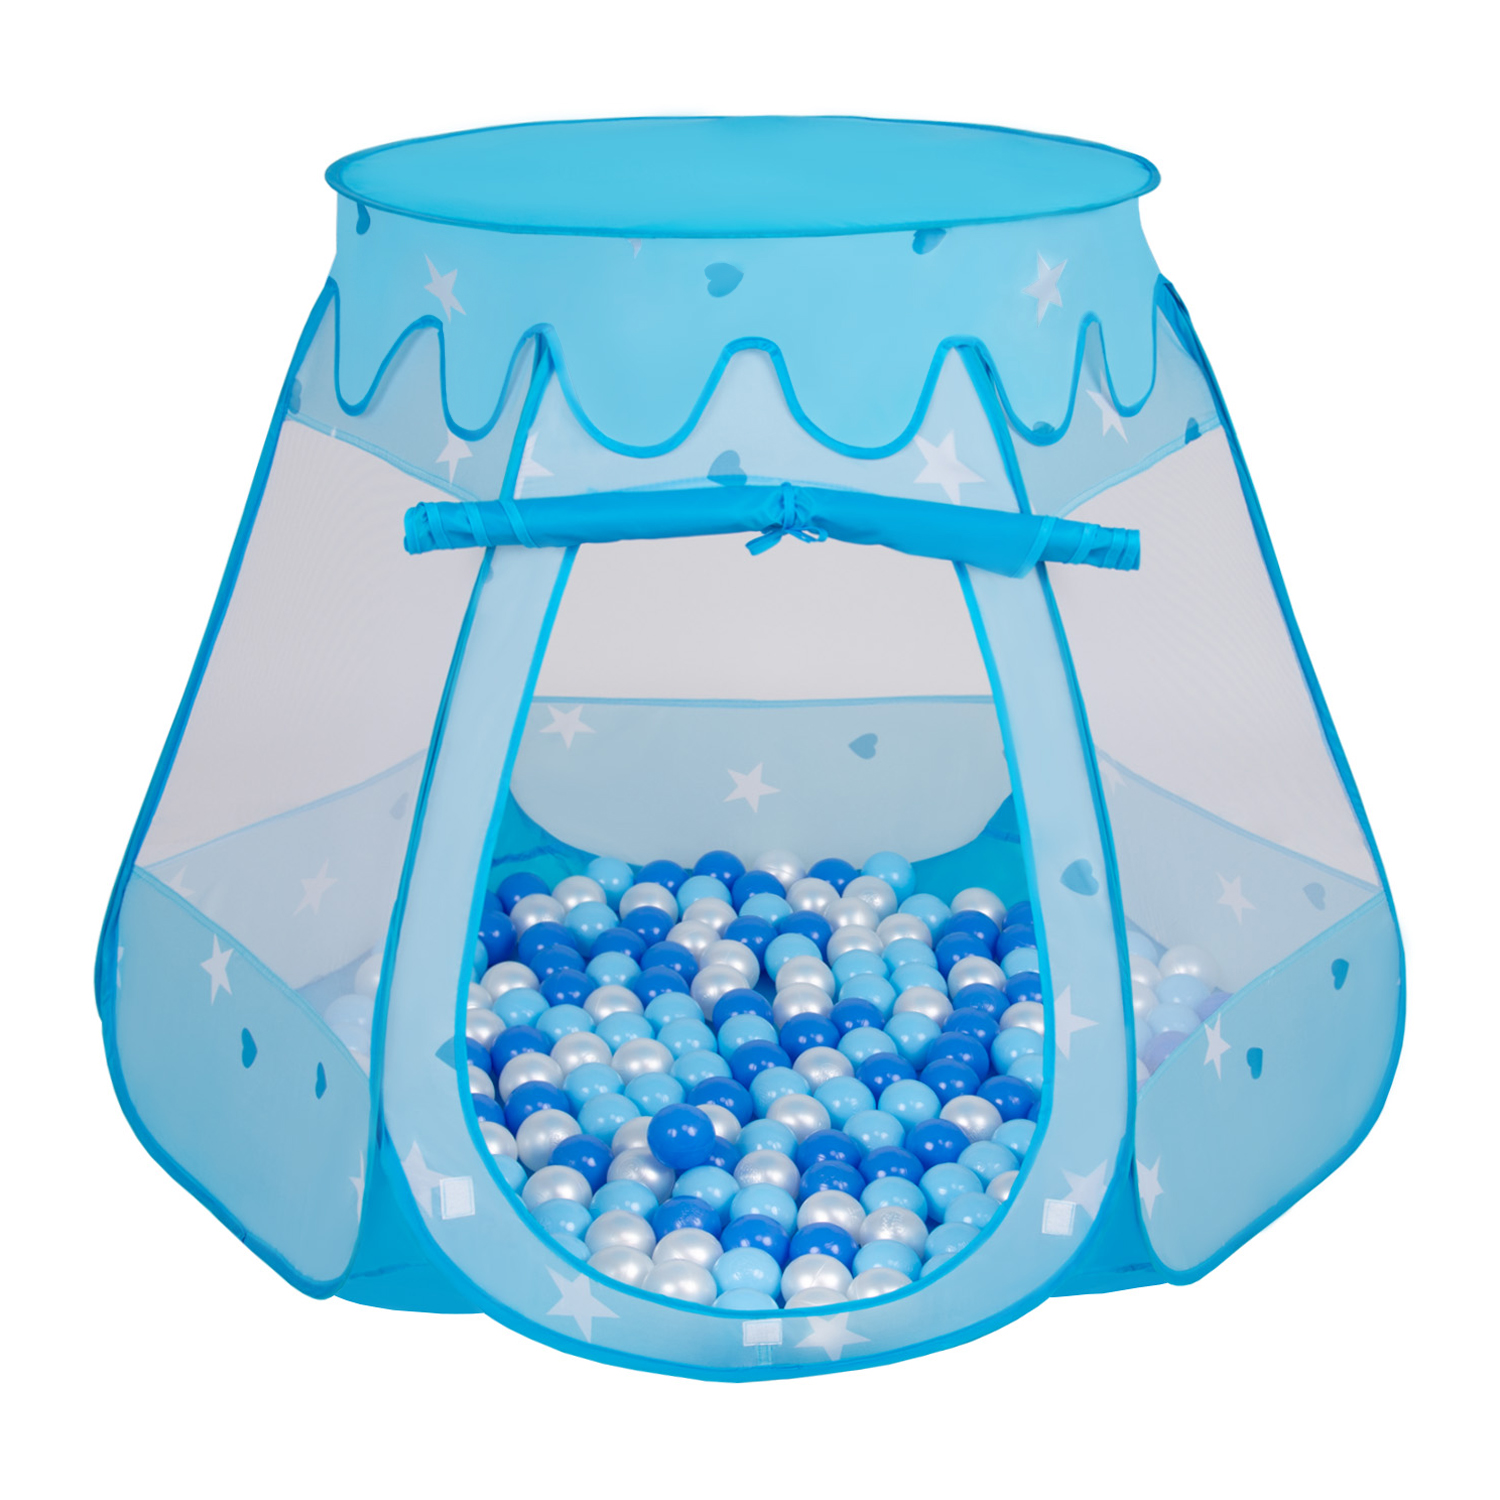 HSM Pop Up Bällebad mit 100 Bällen Spielhaus Kinderzelt Spielzelt Babypool Blau 